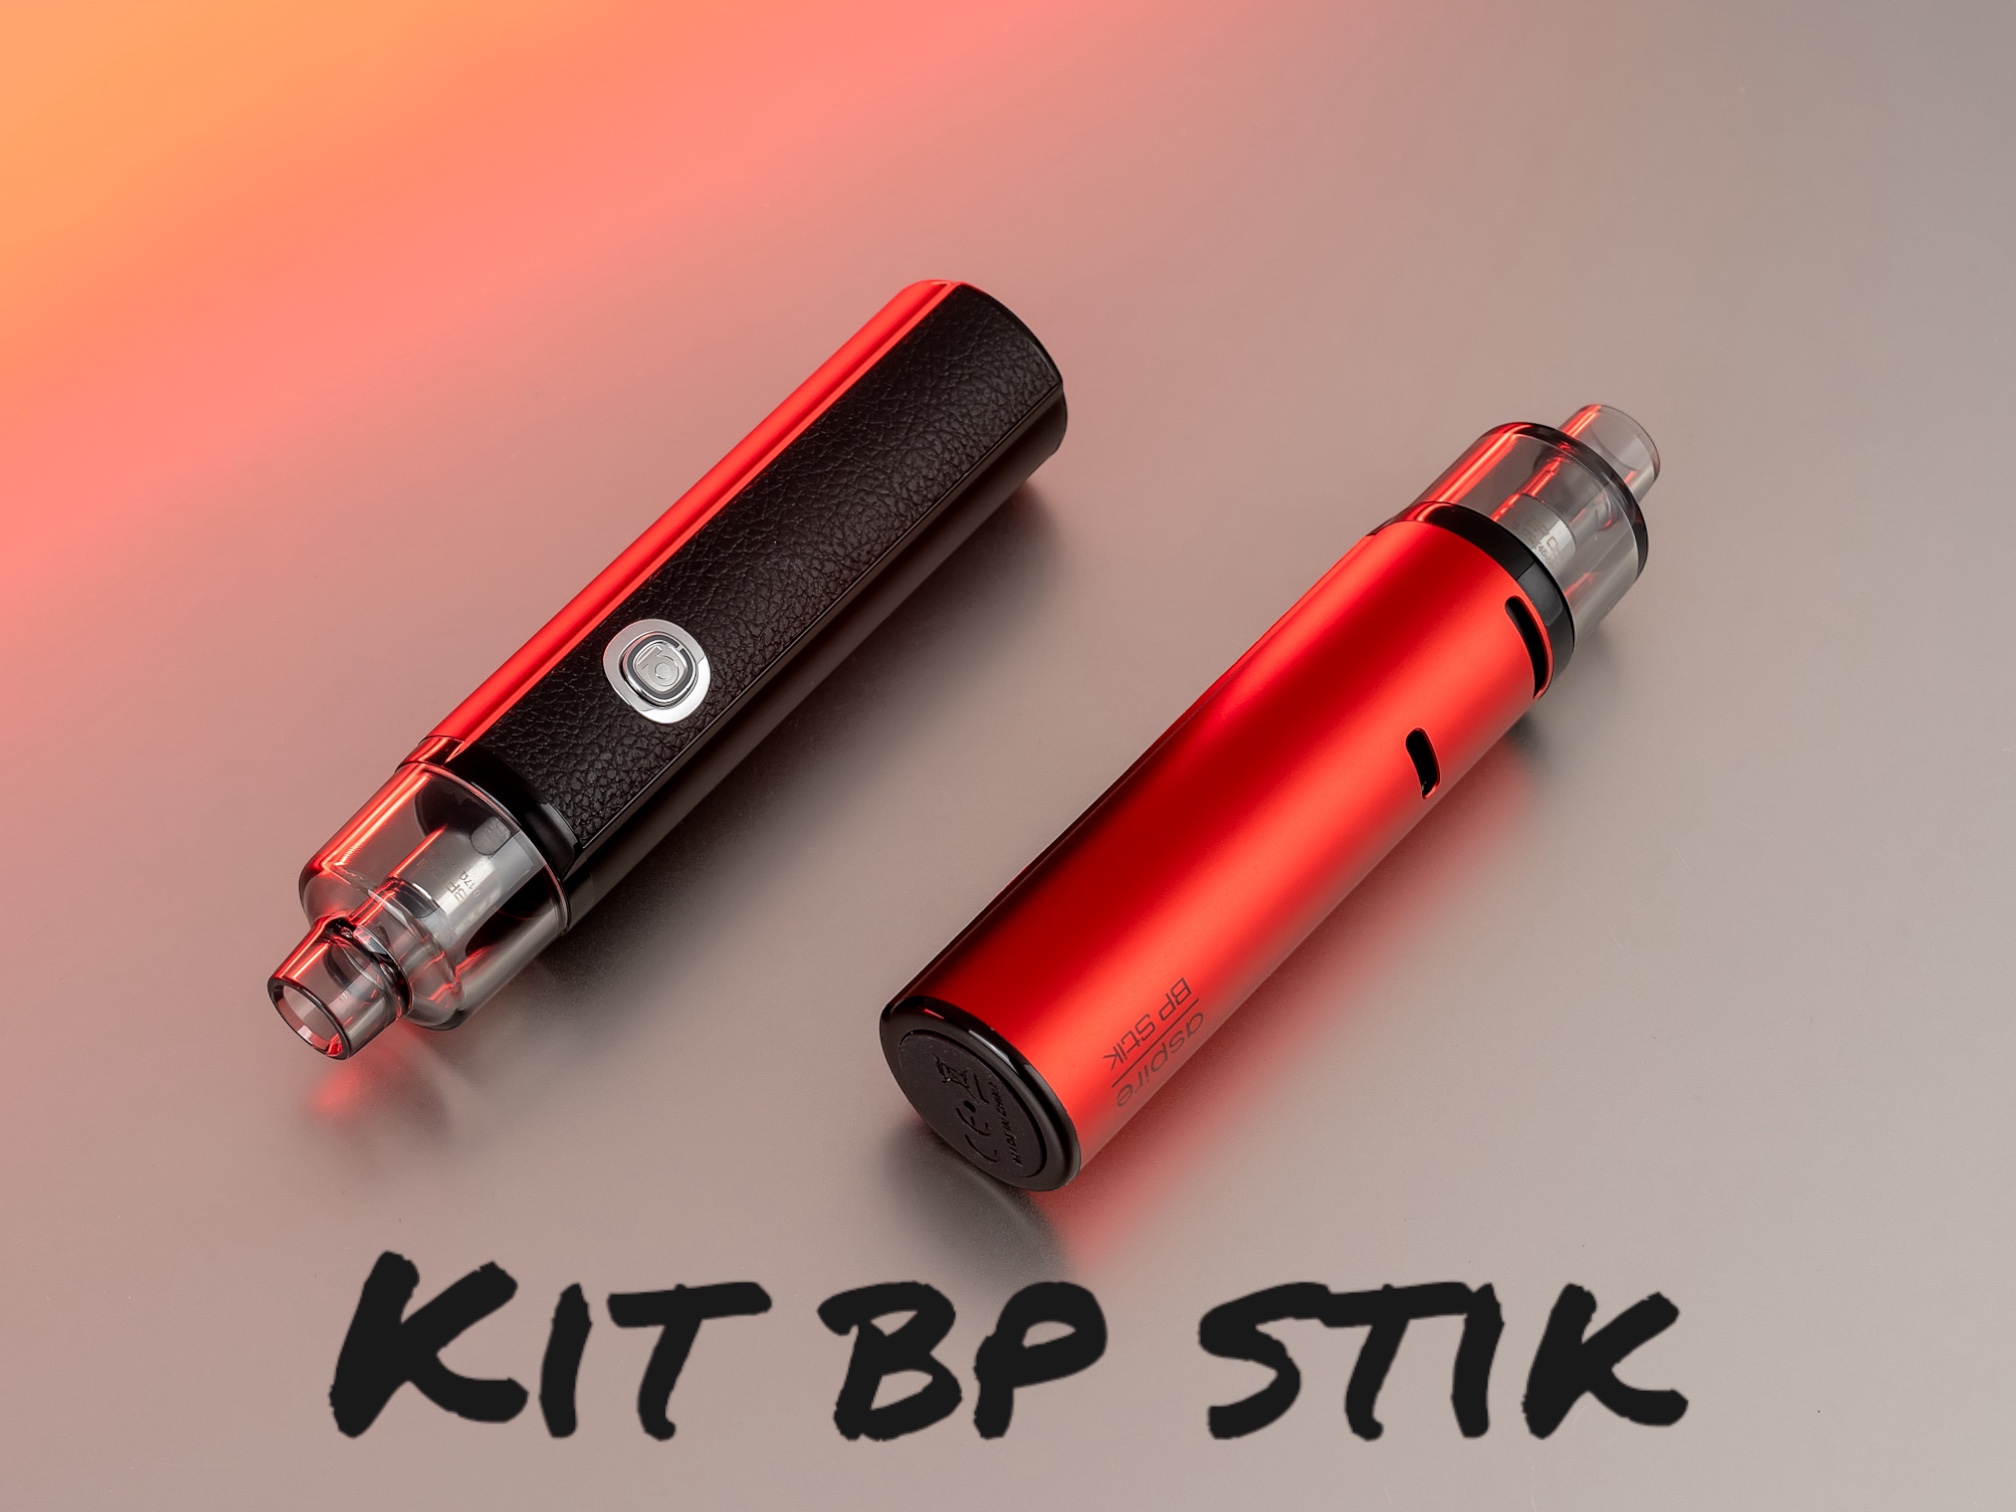 kit bp stick red and black aspire